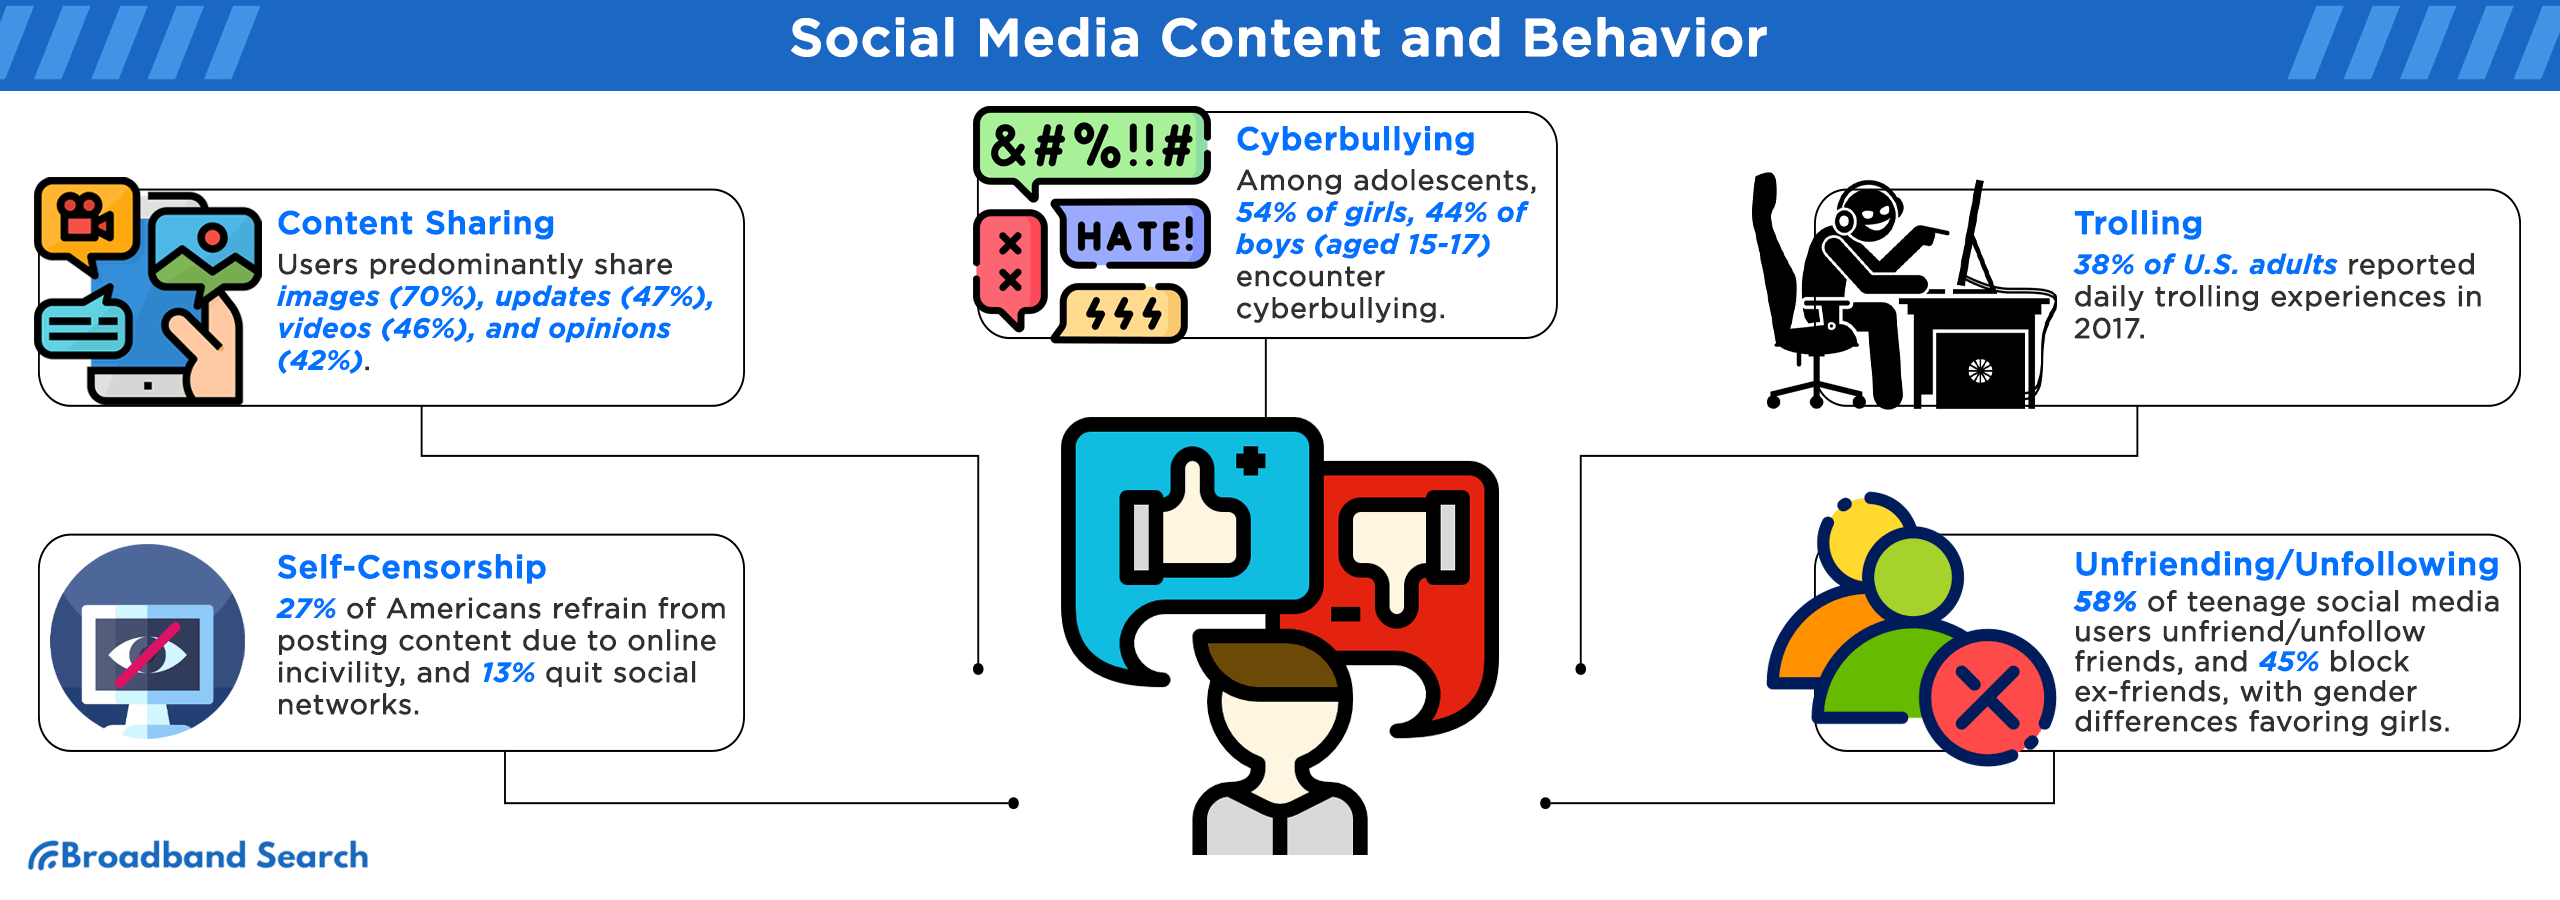 Statistics on social media content usage and behavior